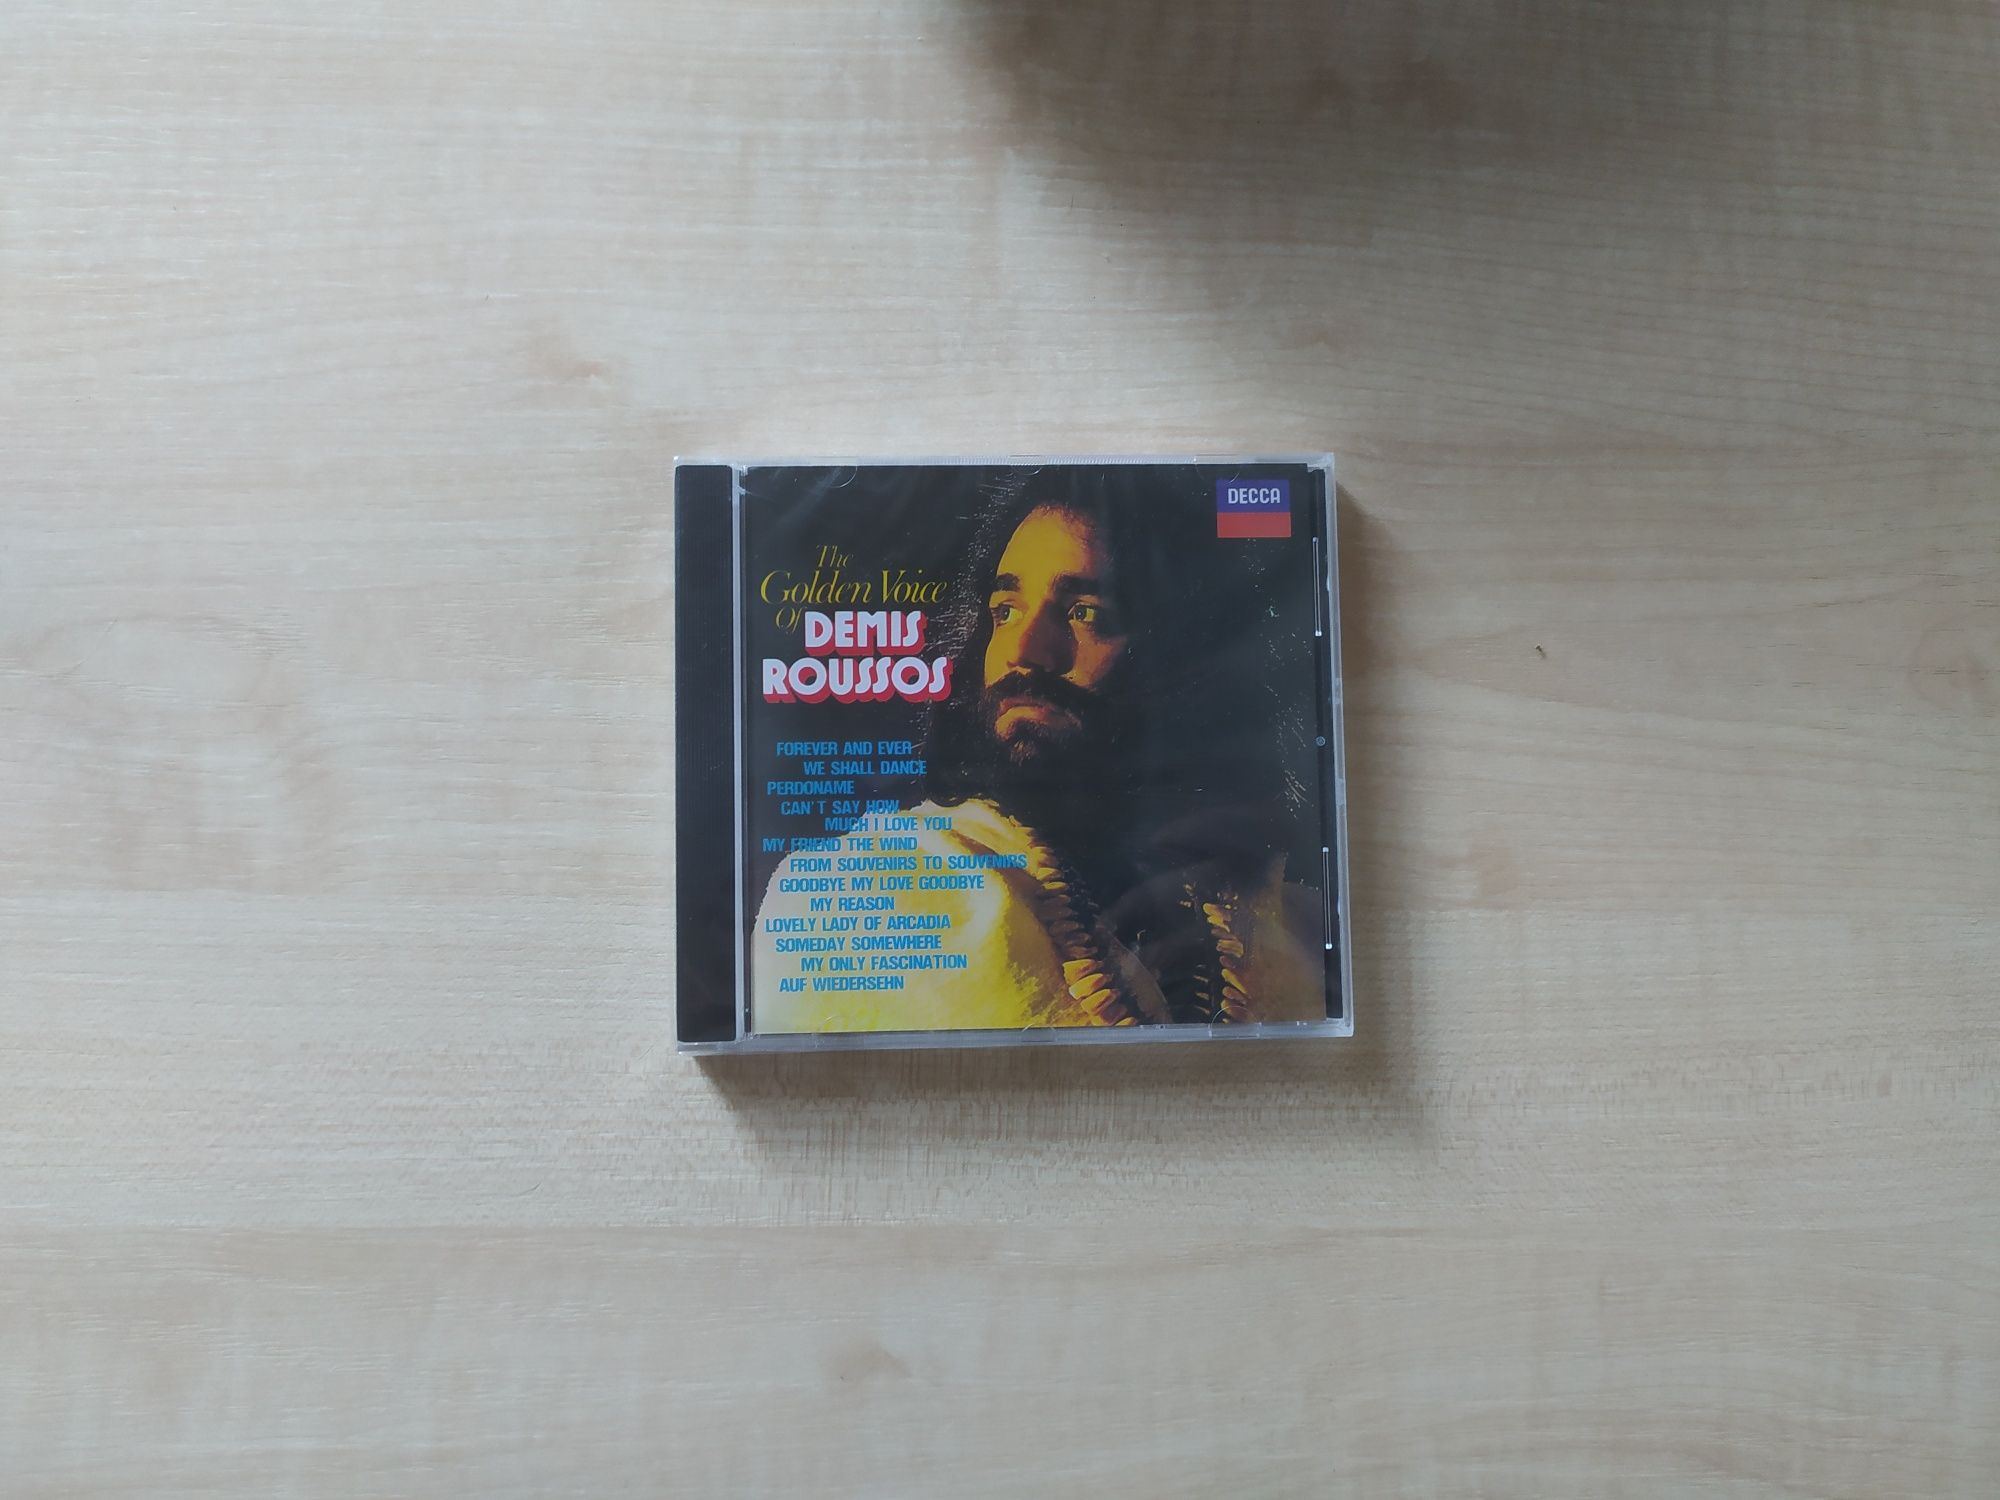 Demis Roussos - The Golden Voice of - cd